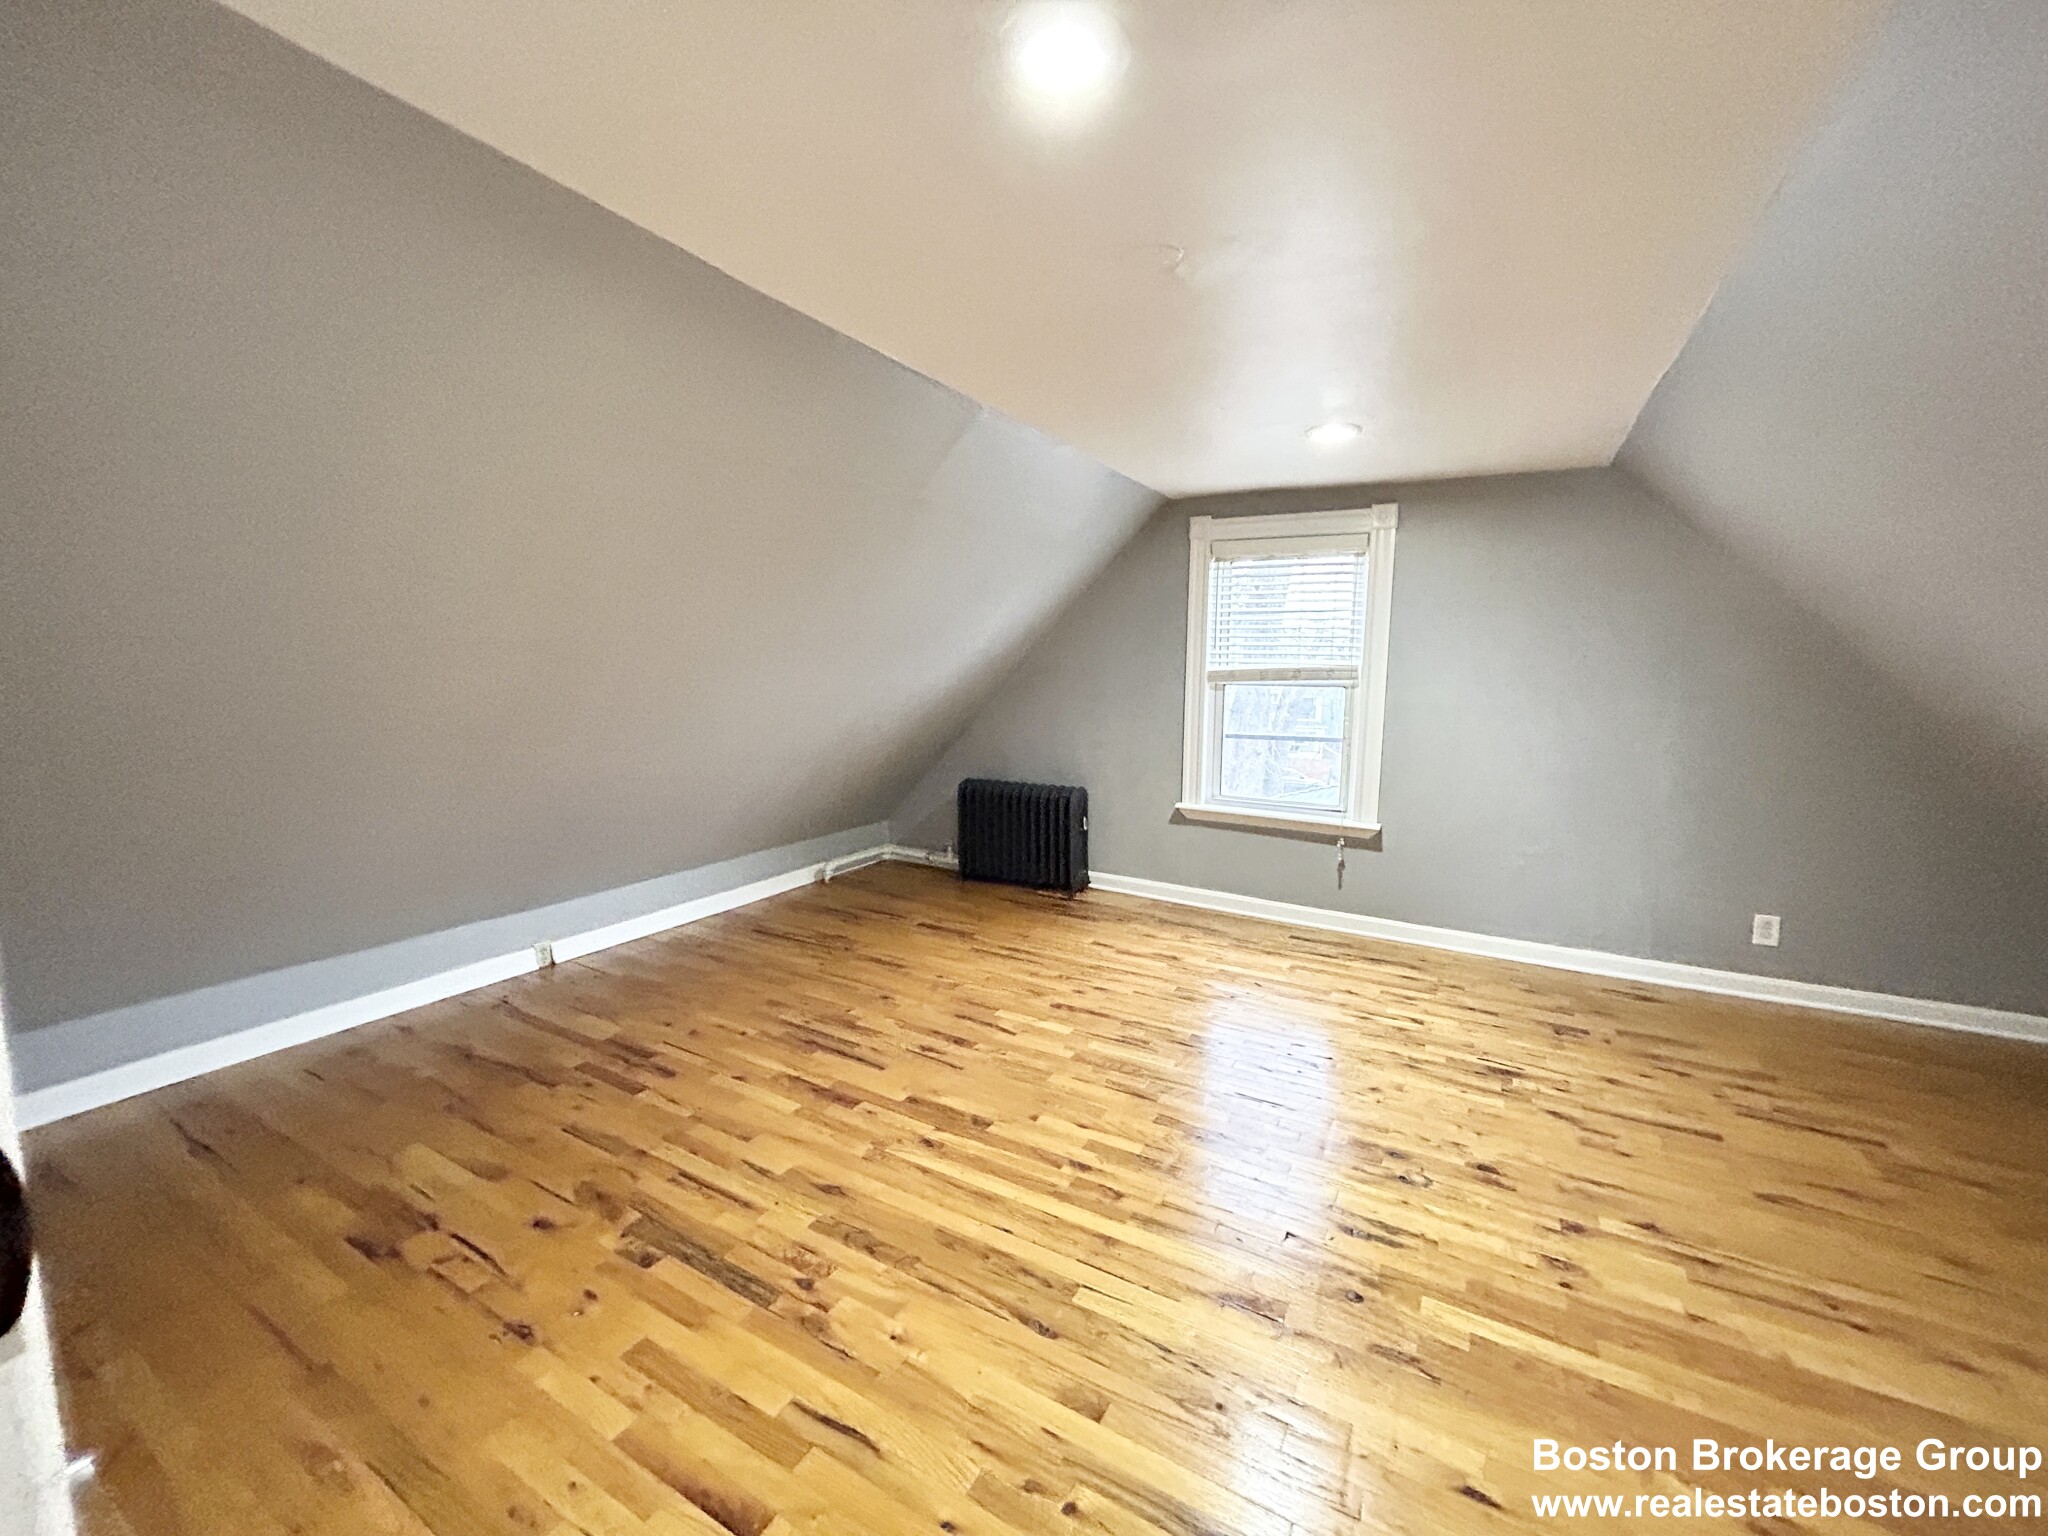 Photos of apartment on Batchelder St.,Boston MA 02125